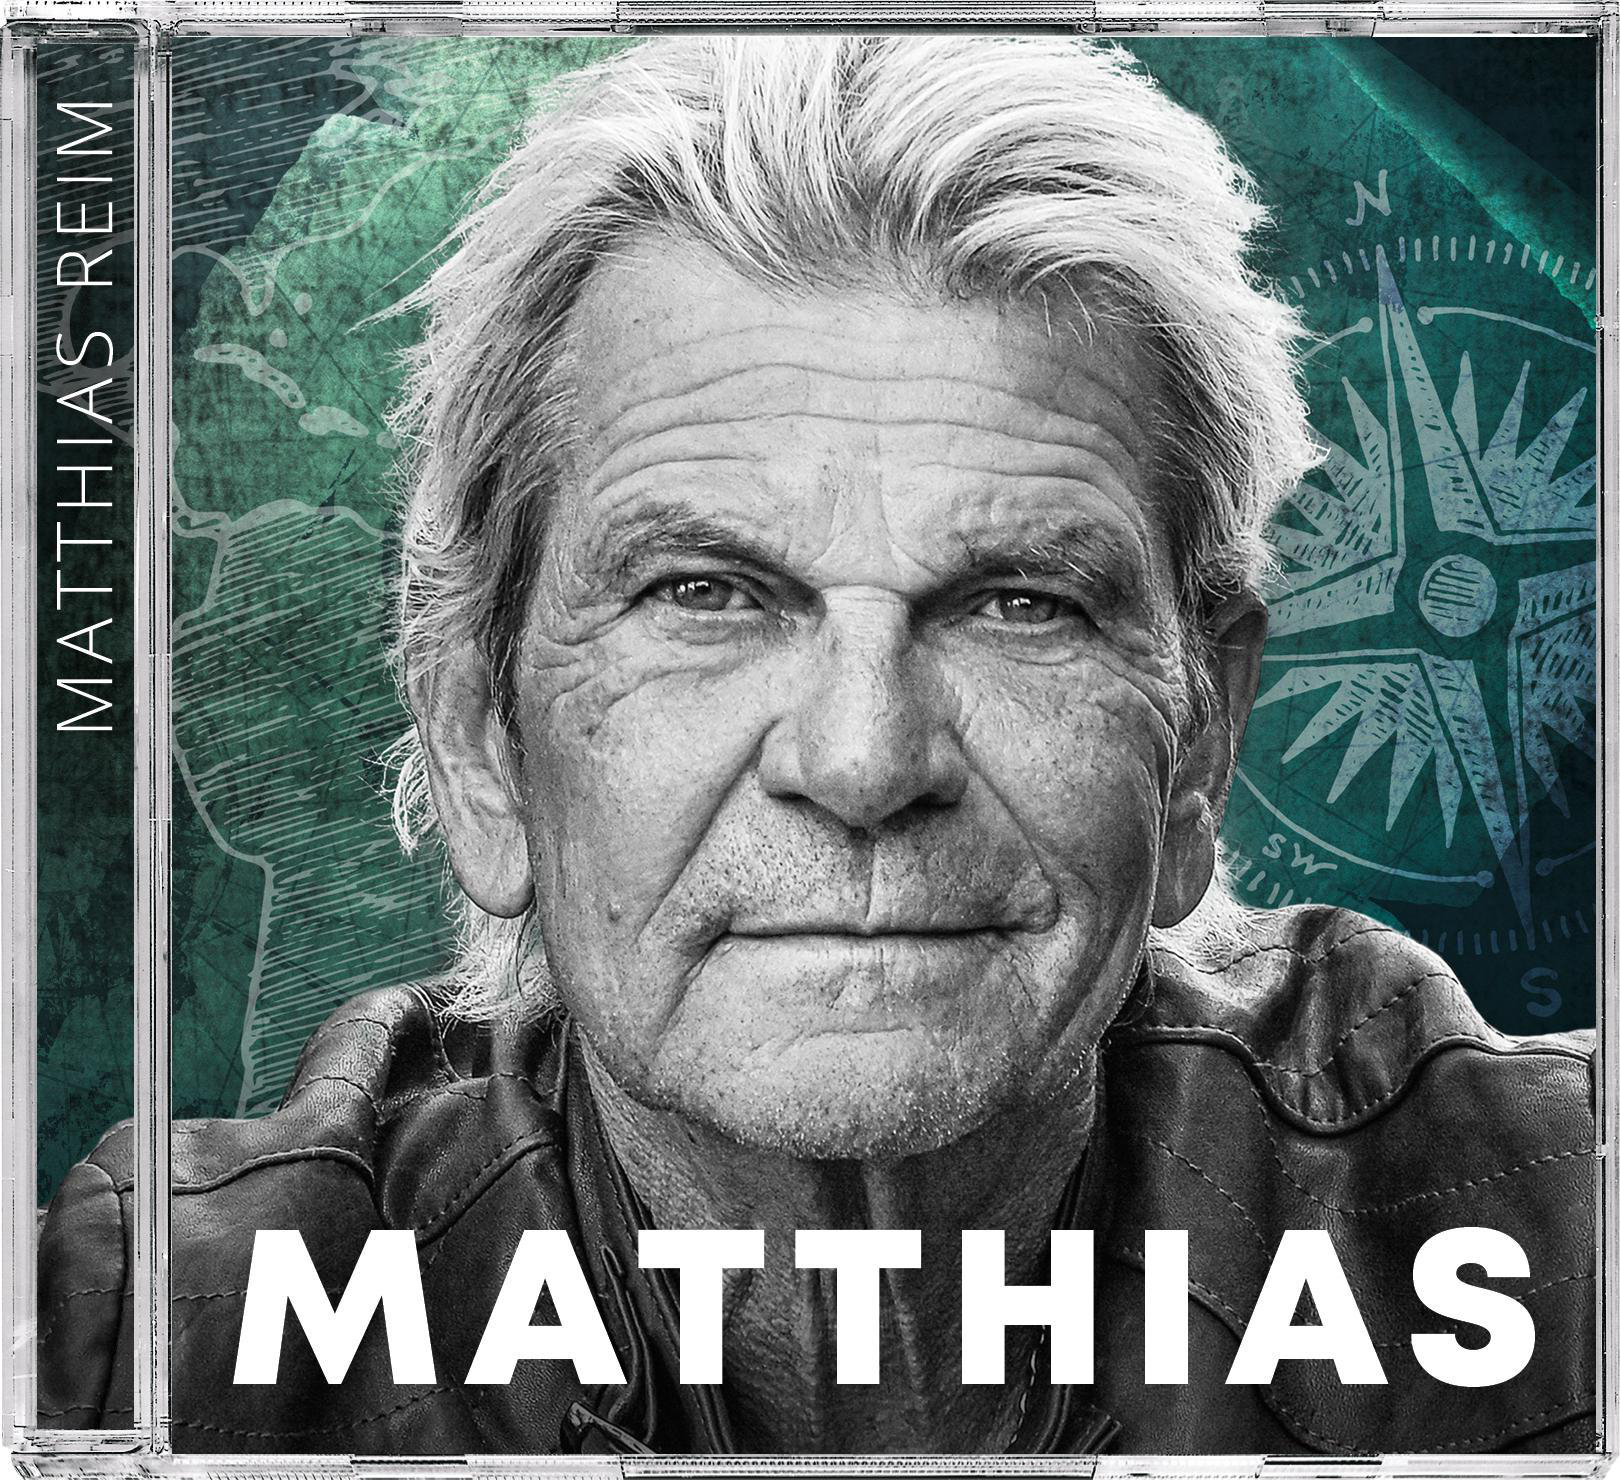 Matthias MATTHIAS (CD) - - Reim